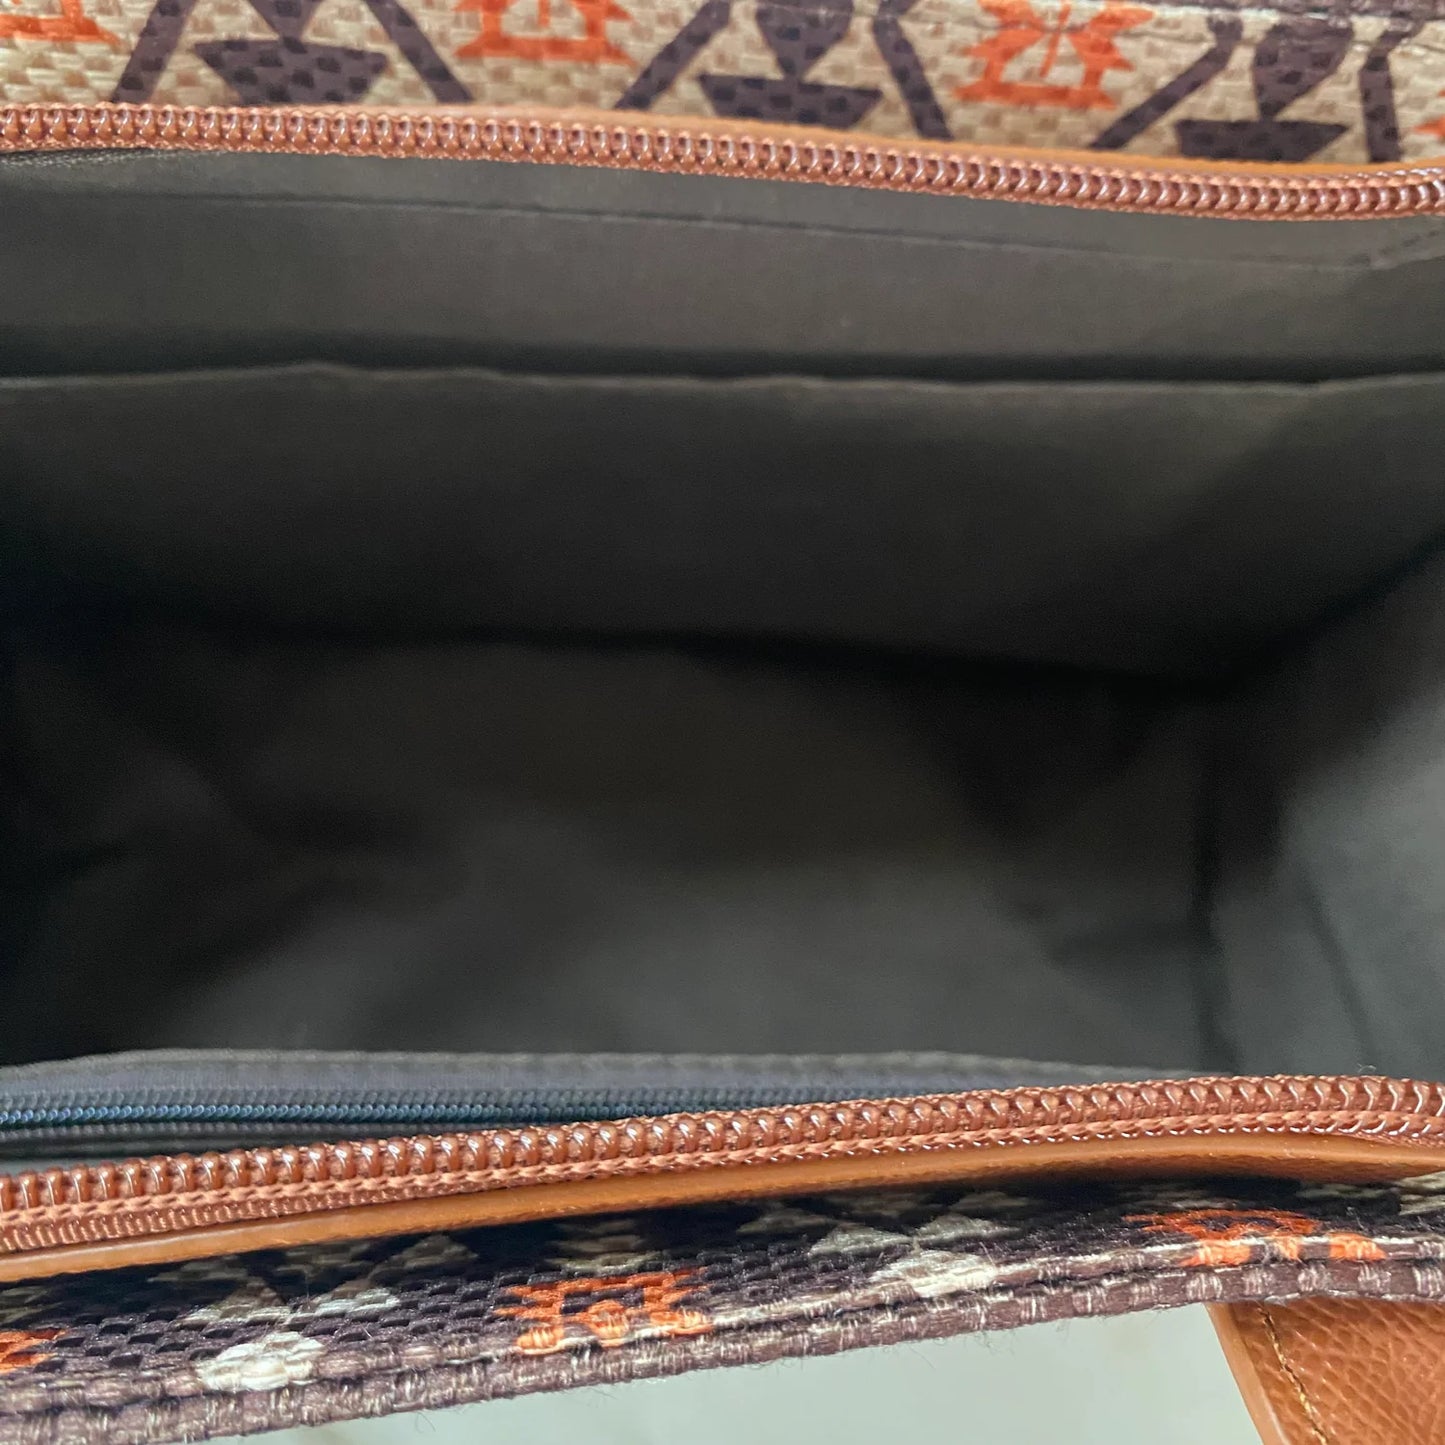 Arizona Tote Bag & Card Wallet in Orange & Turquoise